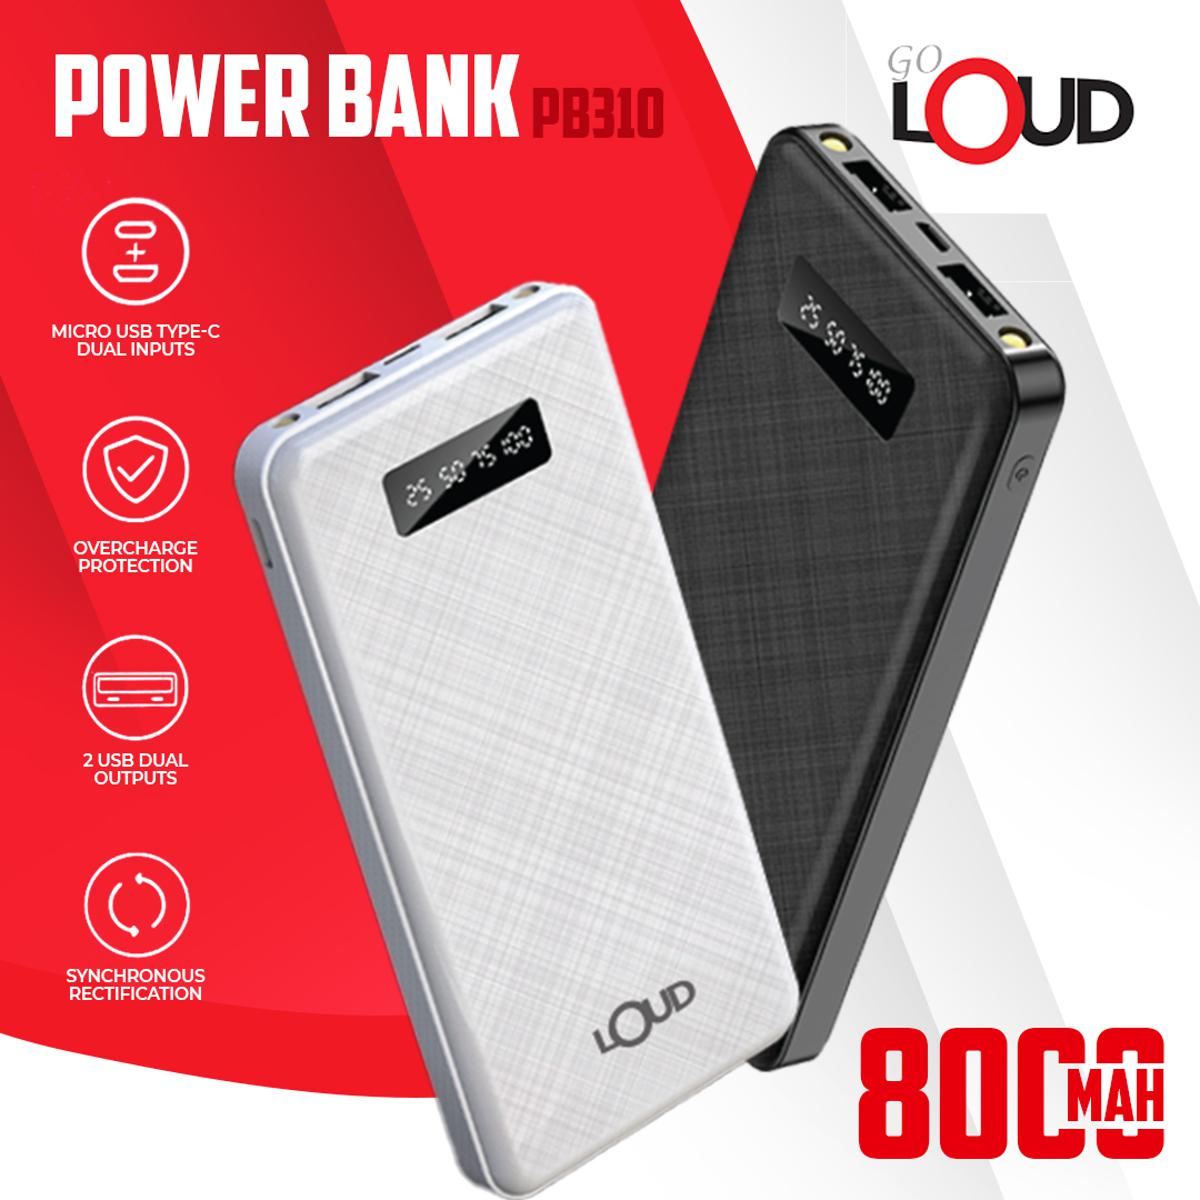 Loud PB310 Power Bank 8000mah Torch & Digital Display With 2.0A Dual Port Light Weight